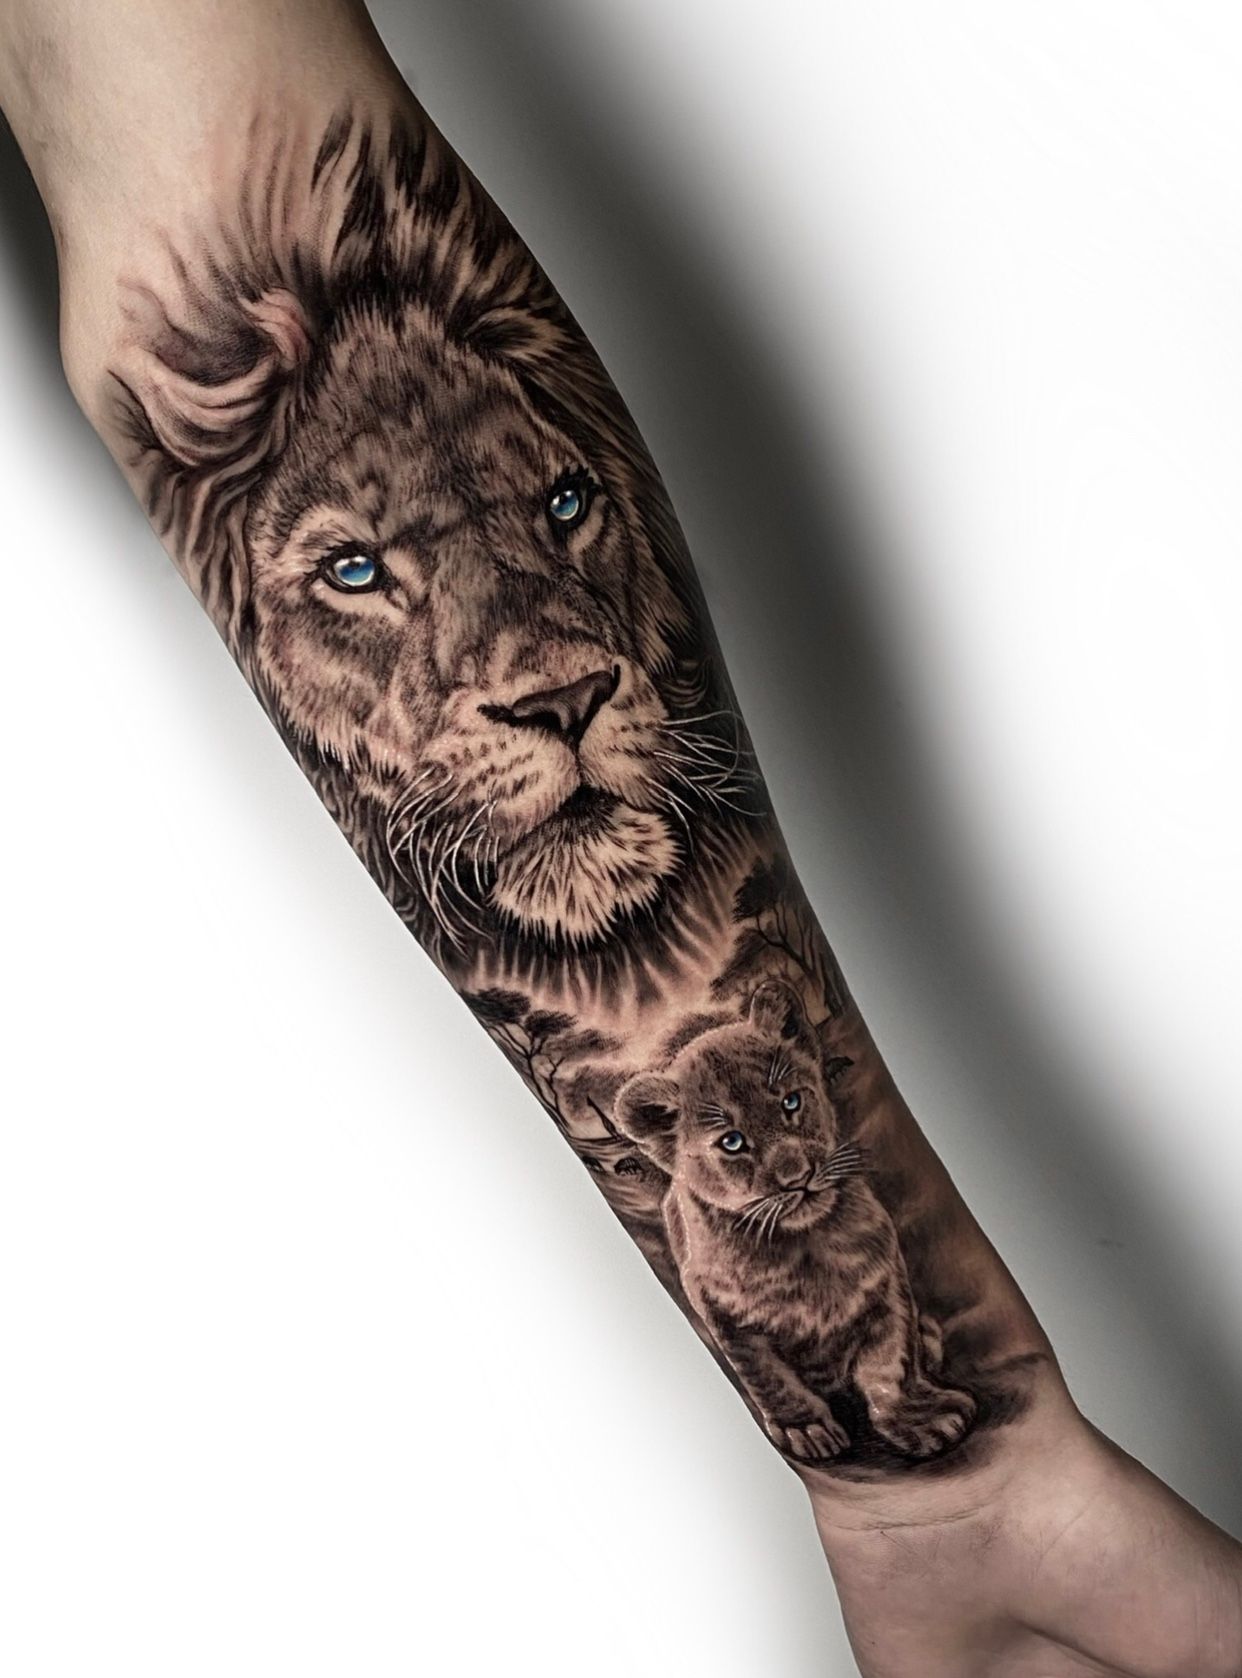 ALBANiAN TATTOOS  Tatuazh nga Dimi   Facebook